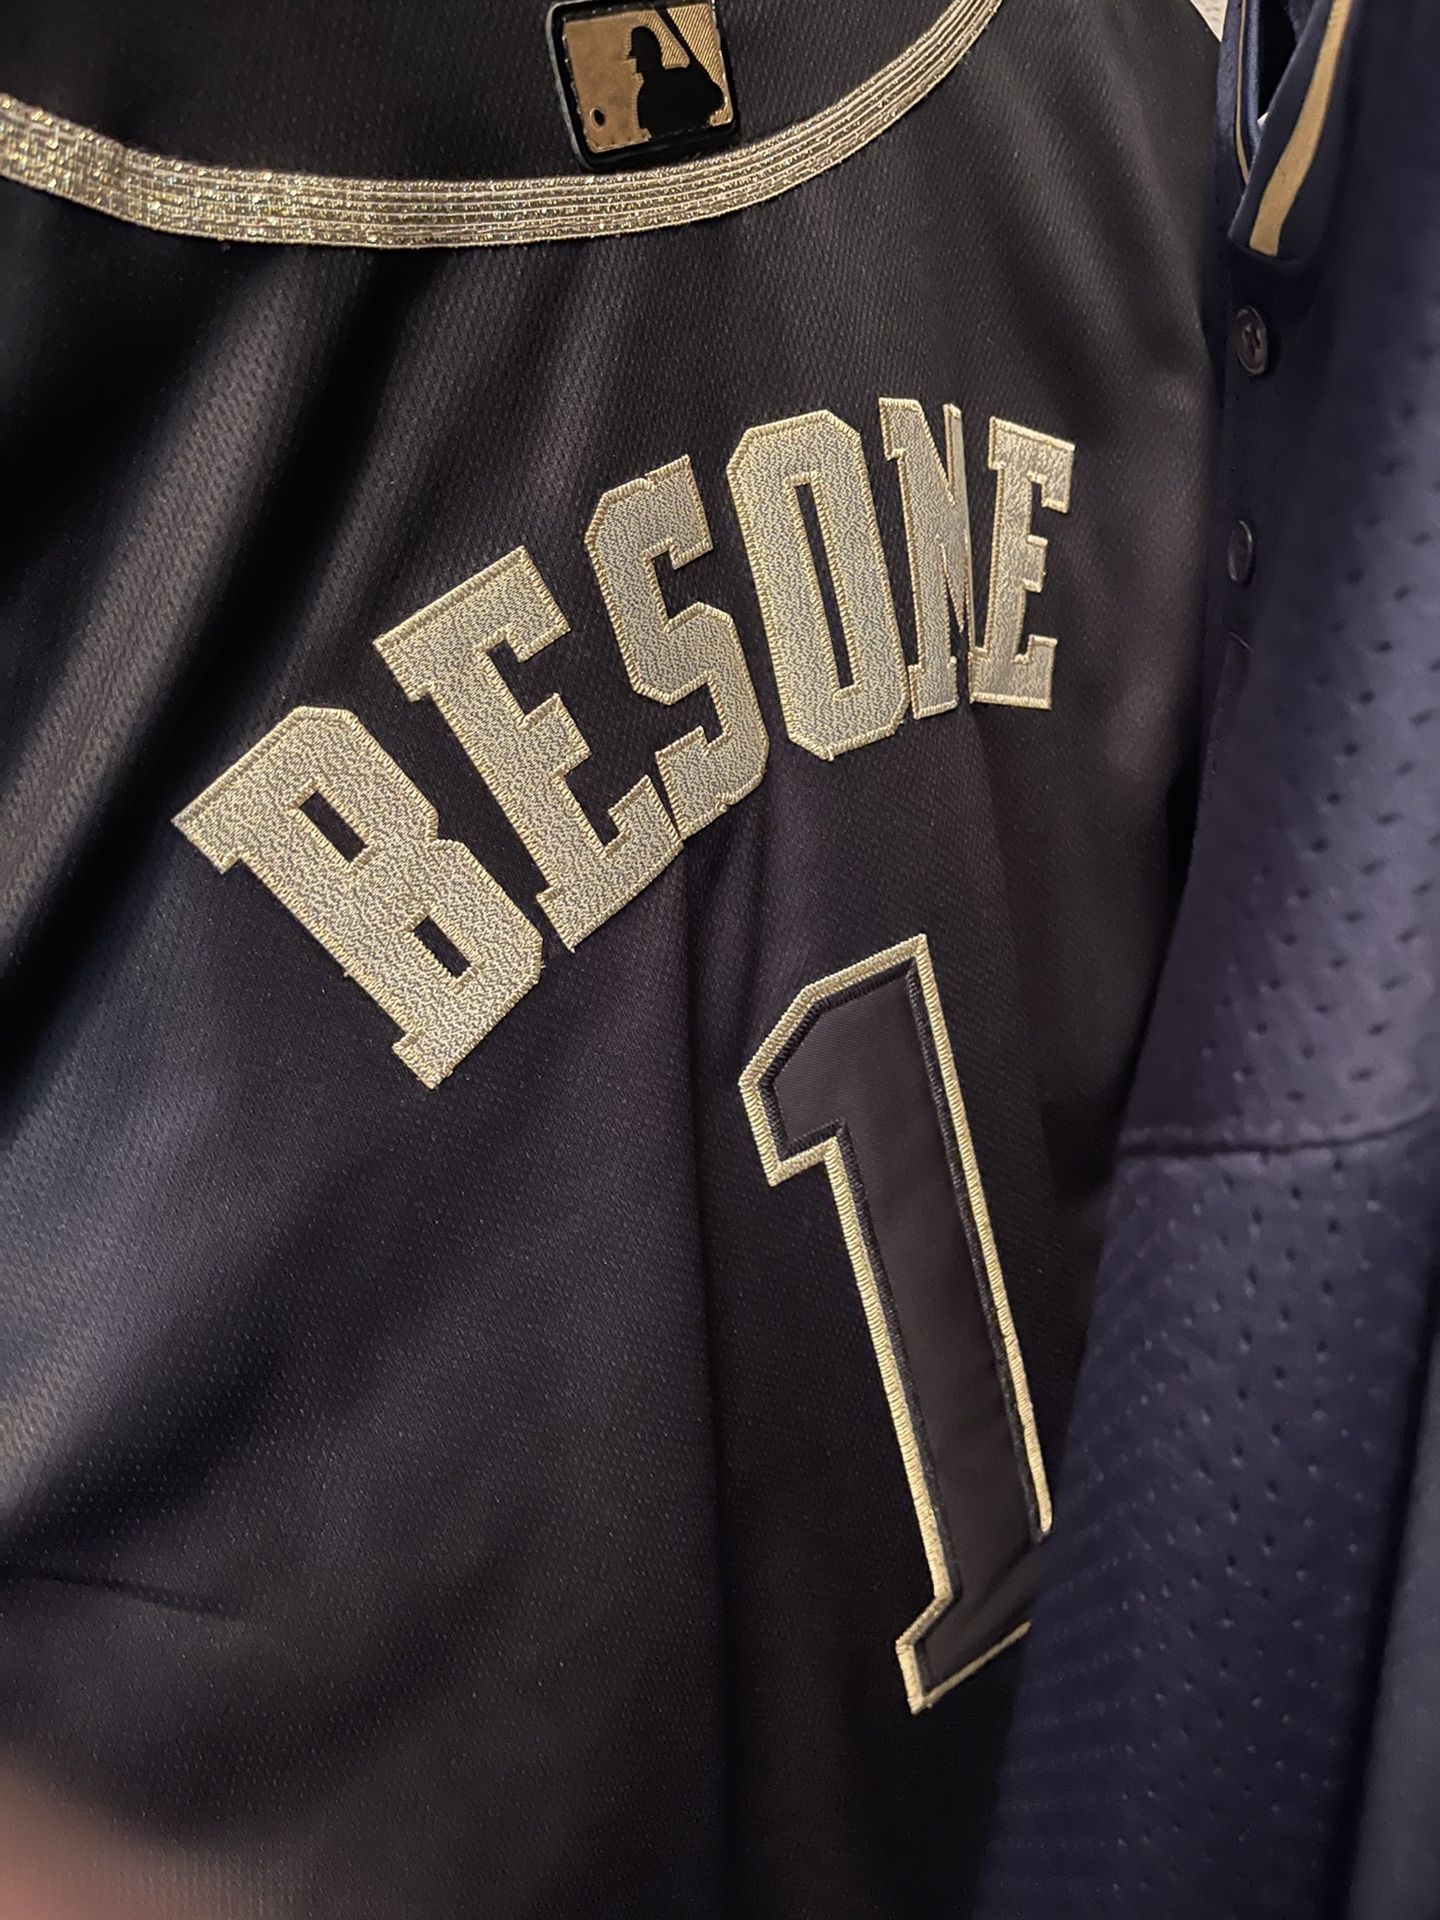 Custom Still Tippin June 27th Besomeone Astros And Texans Jerseys